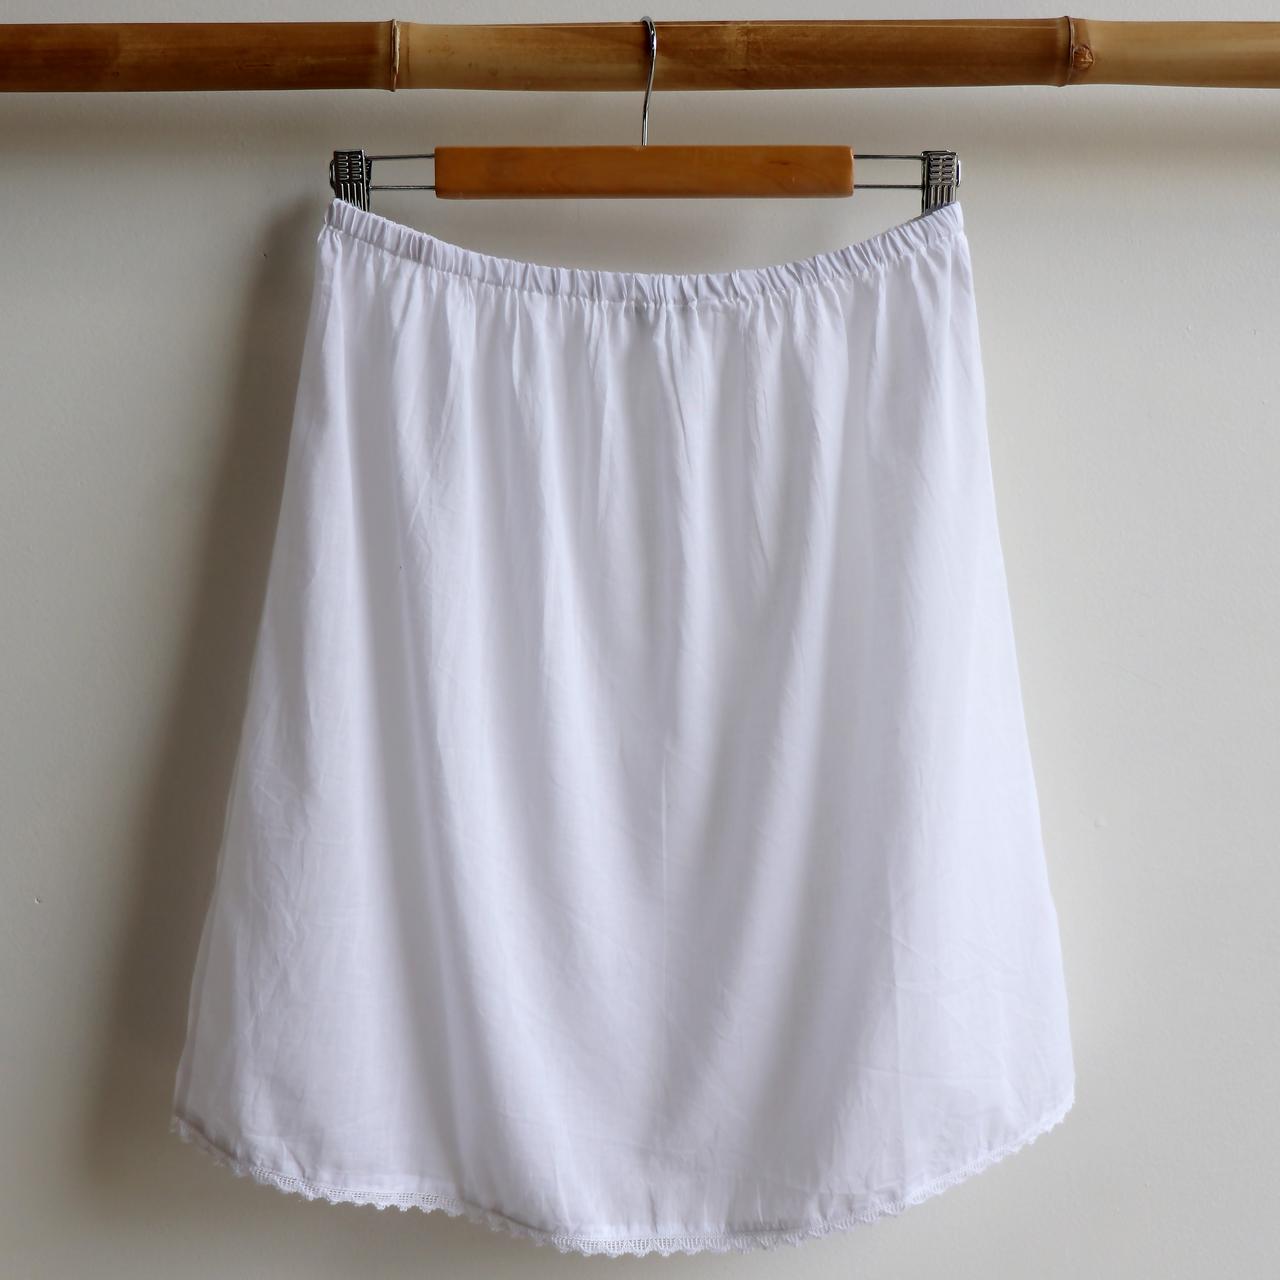 Cute cotton panty up hawt petticoat